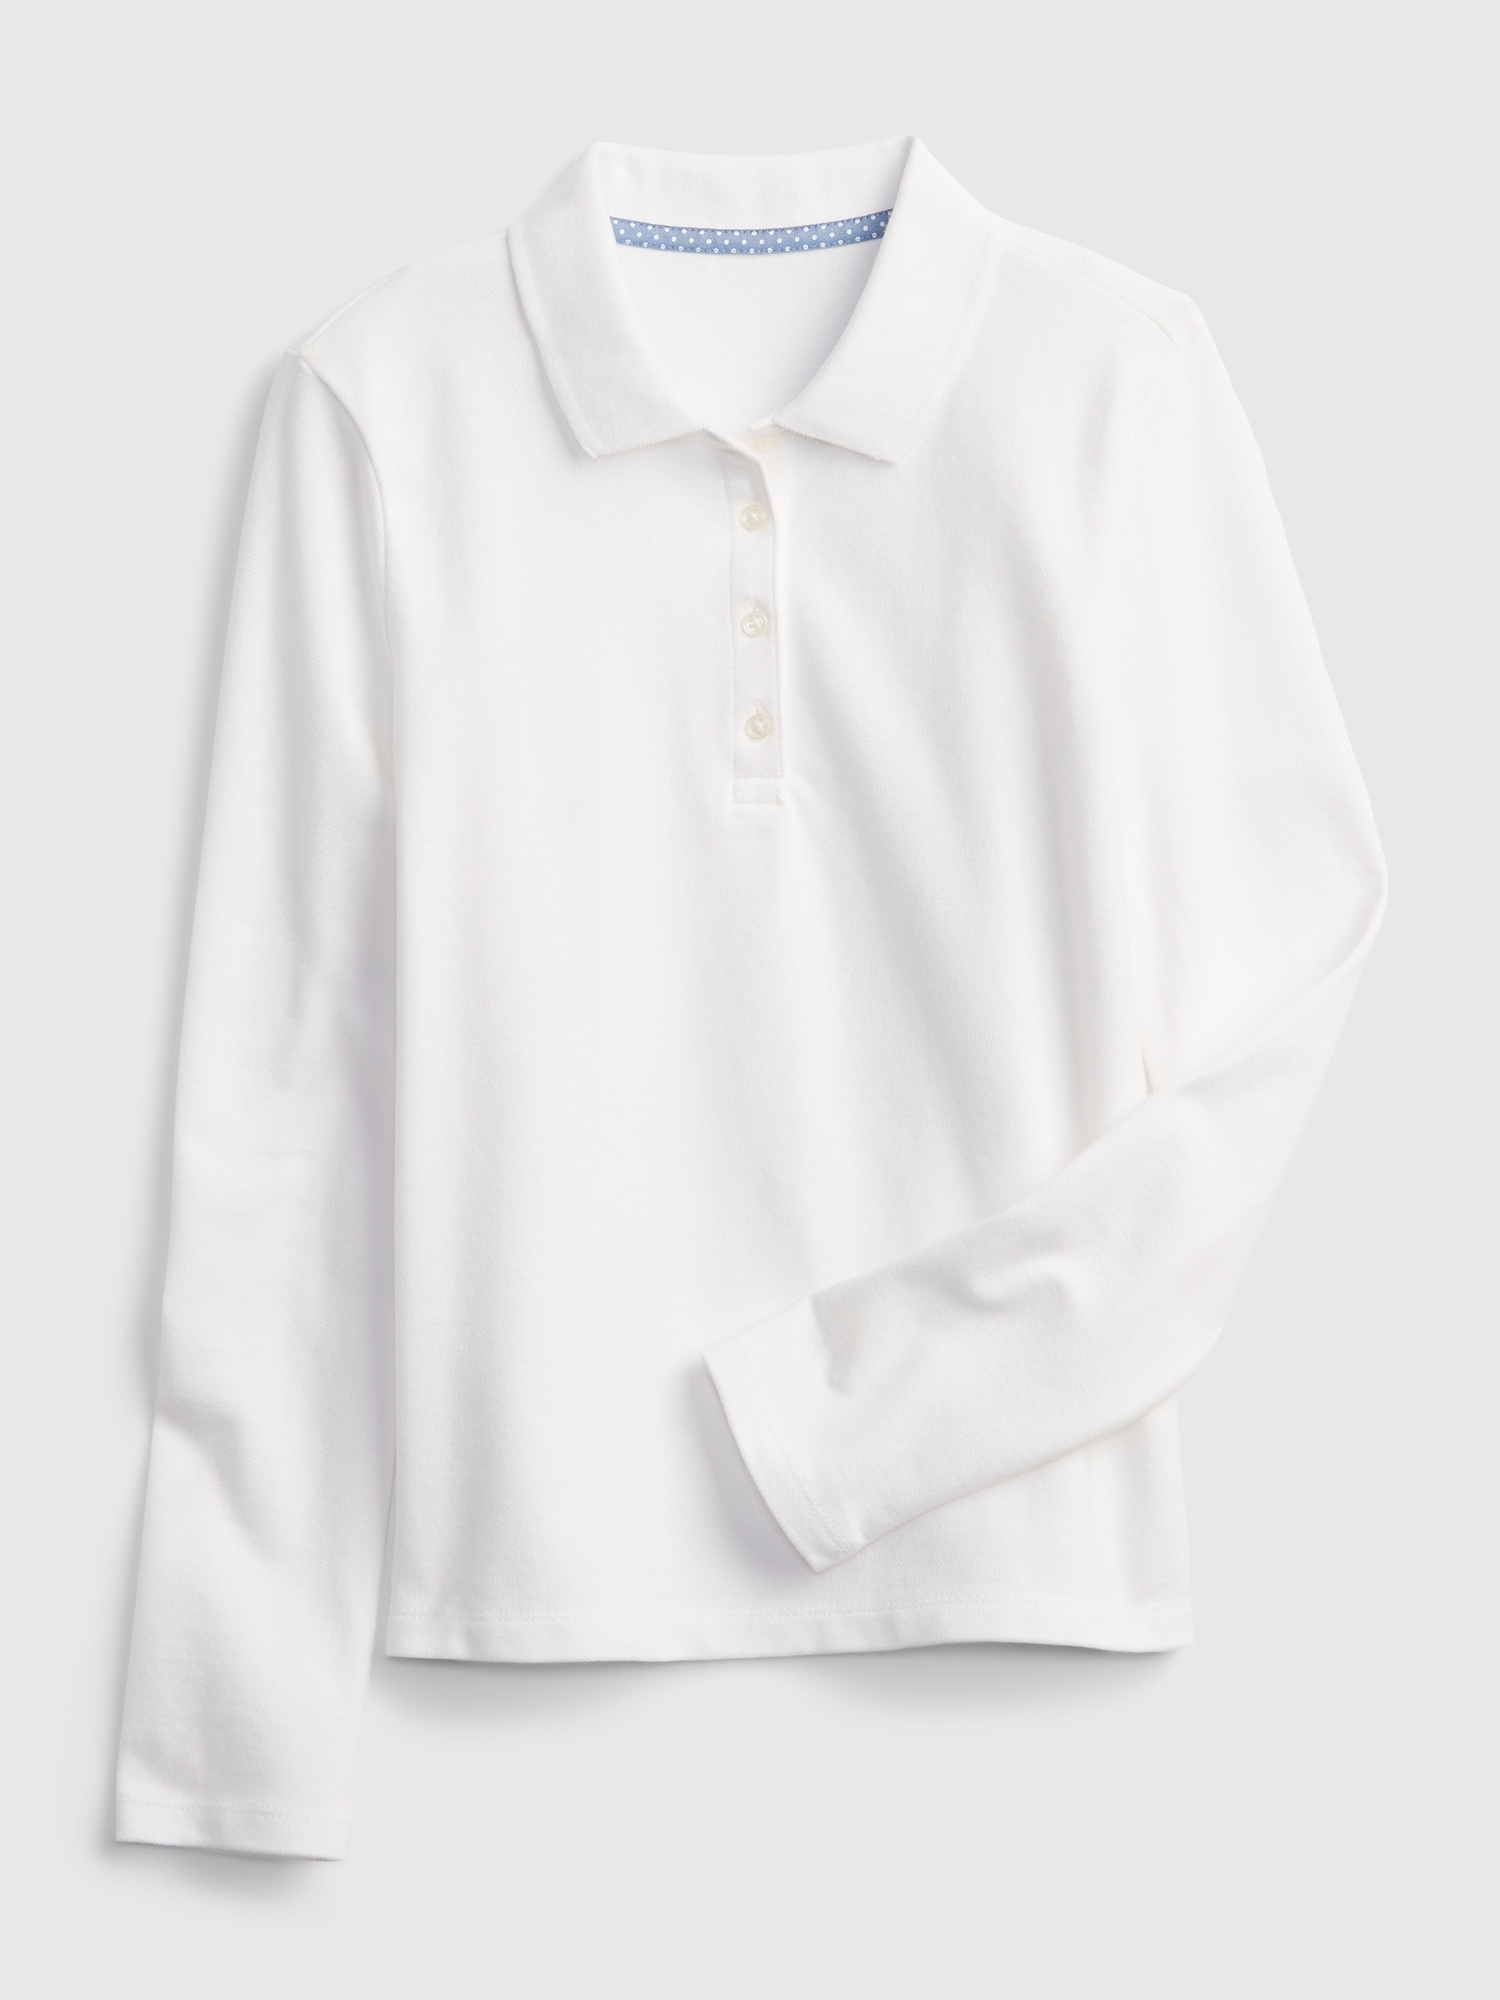 Gap Kids Cotton Uniform Polo Shirt